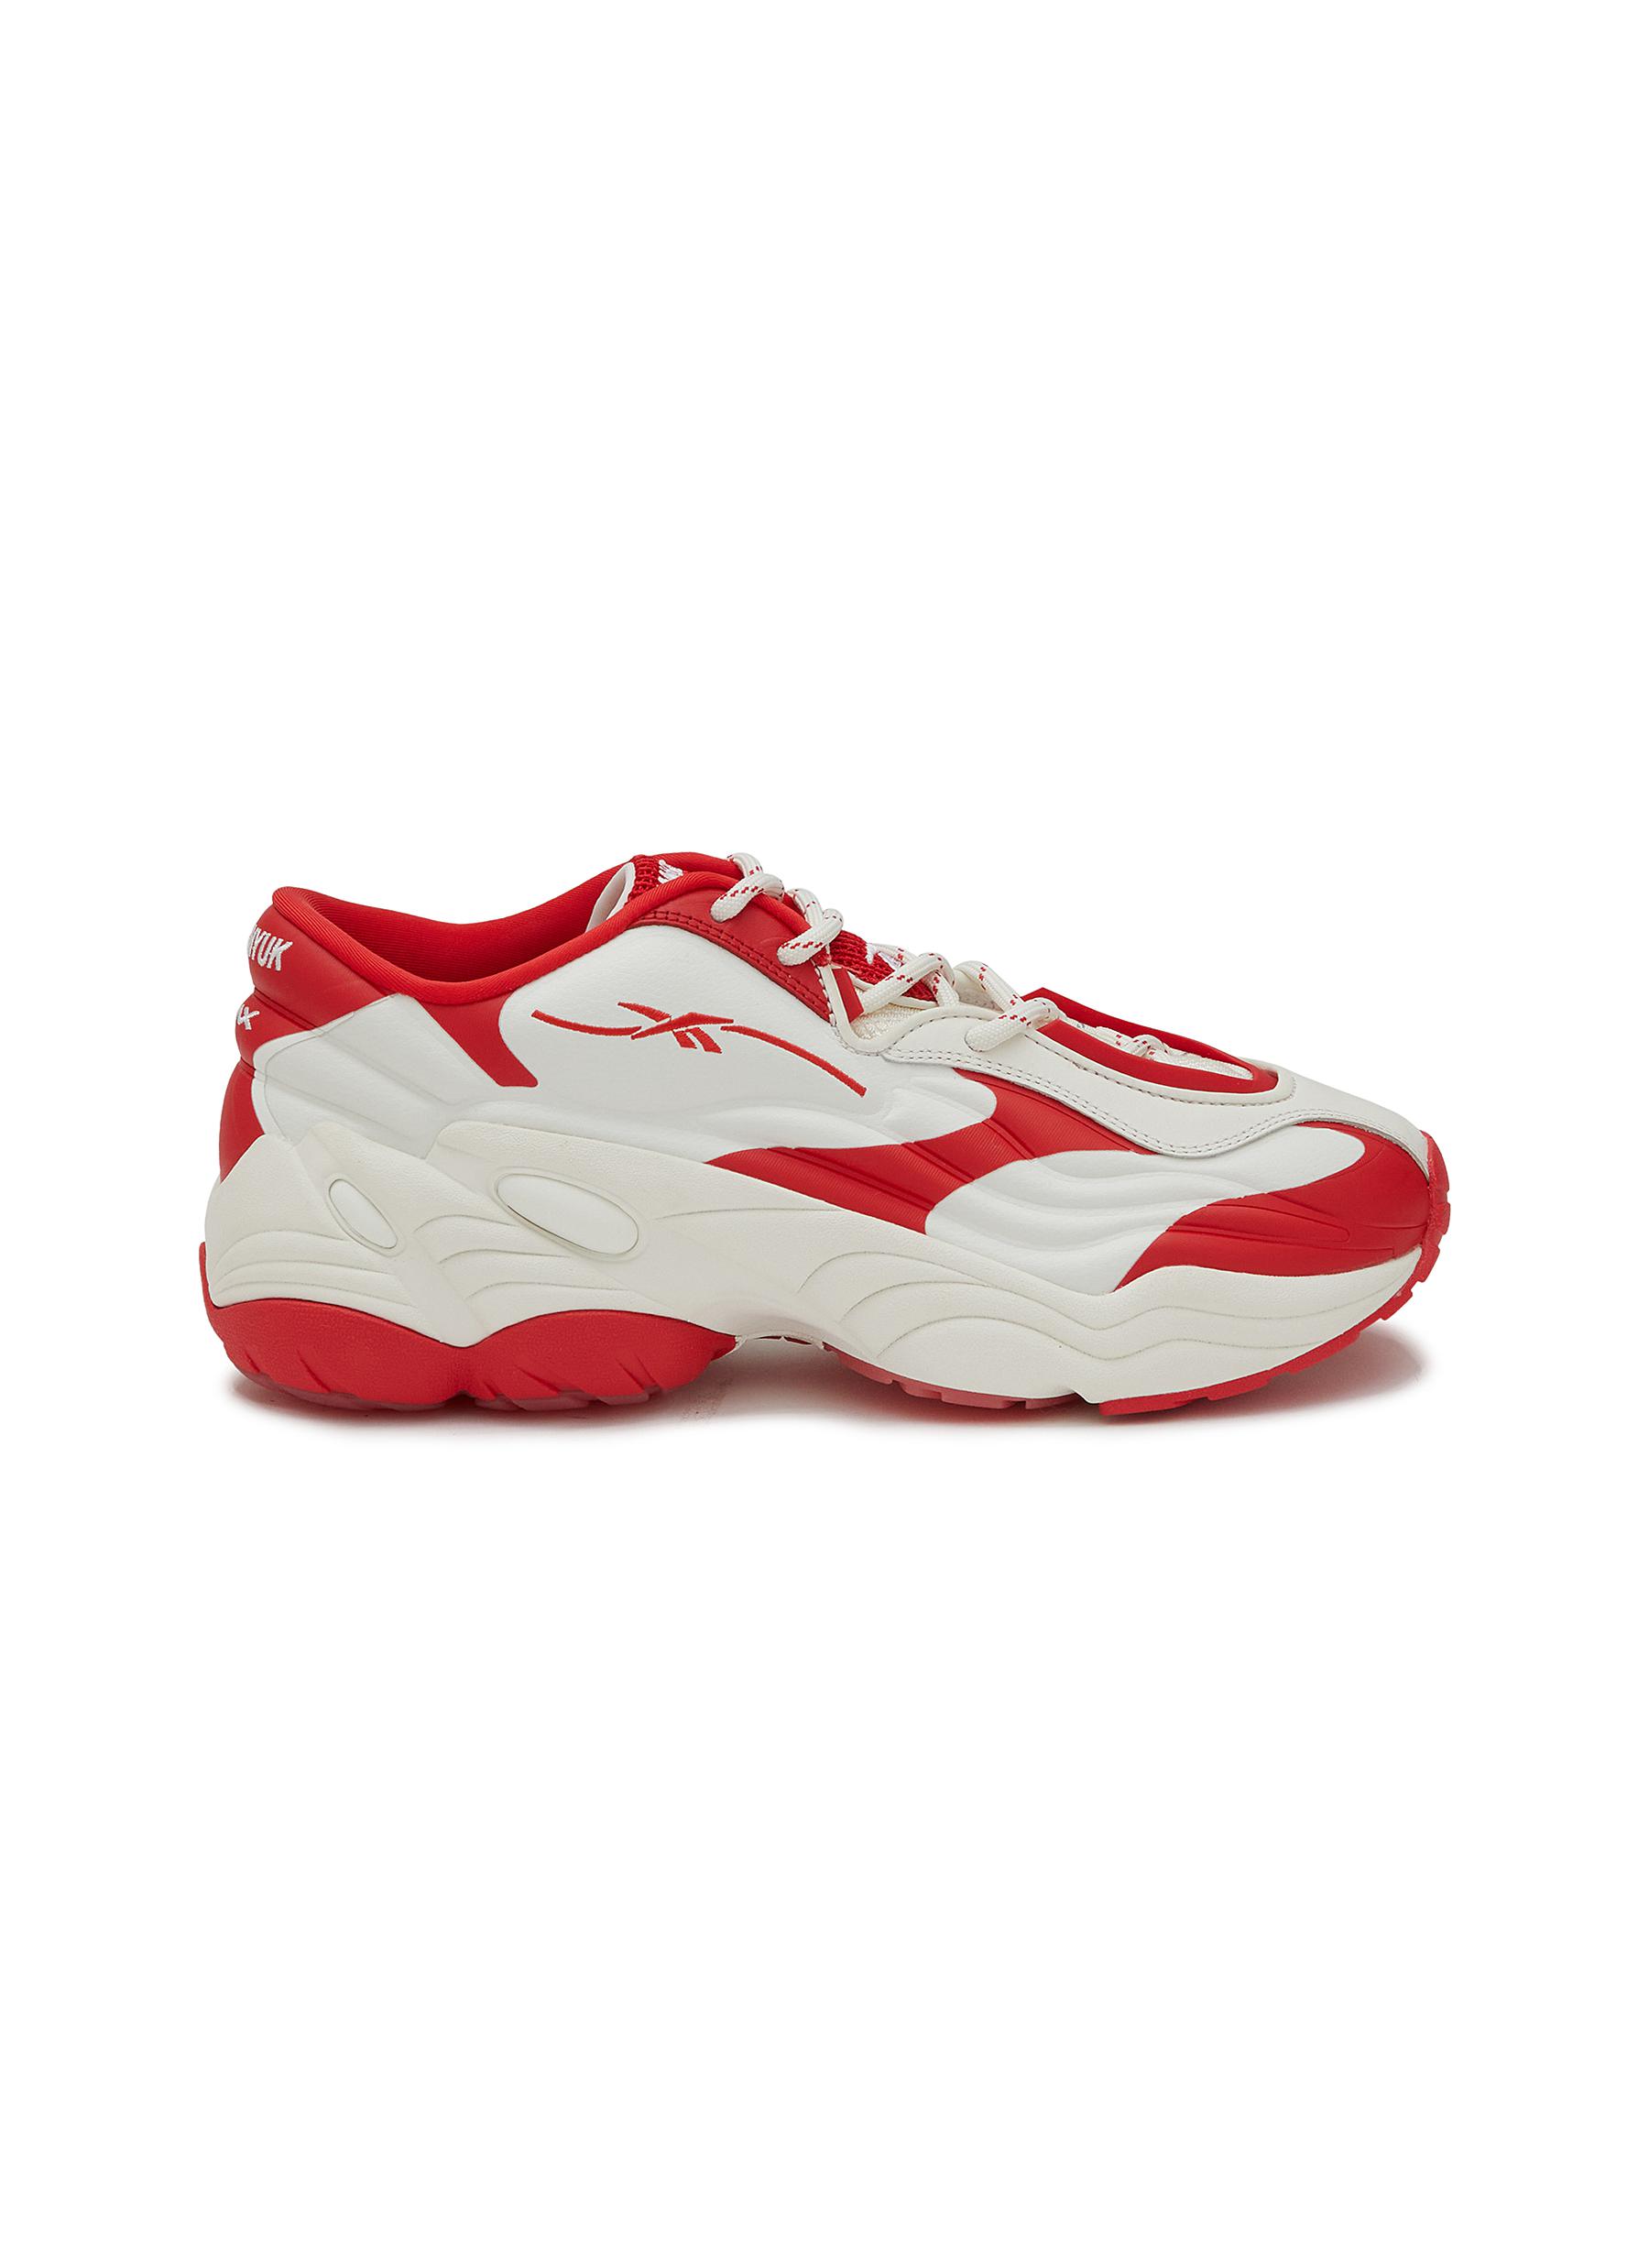 REEBOK | DMX Run 6 Modern Low Top Sneakers | WHITE AND RED | Men 